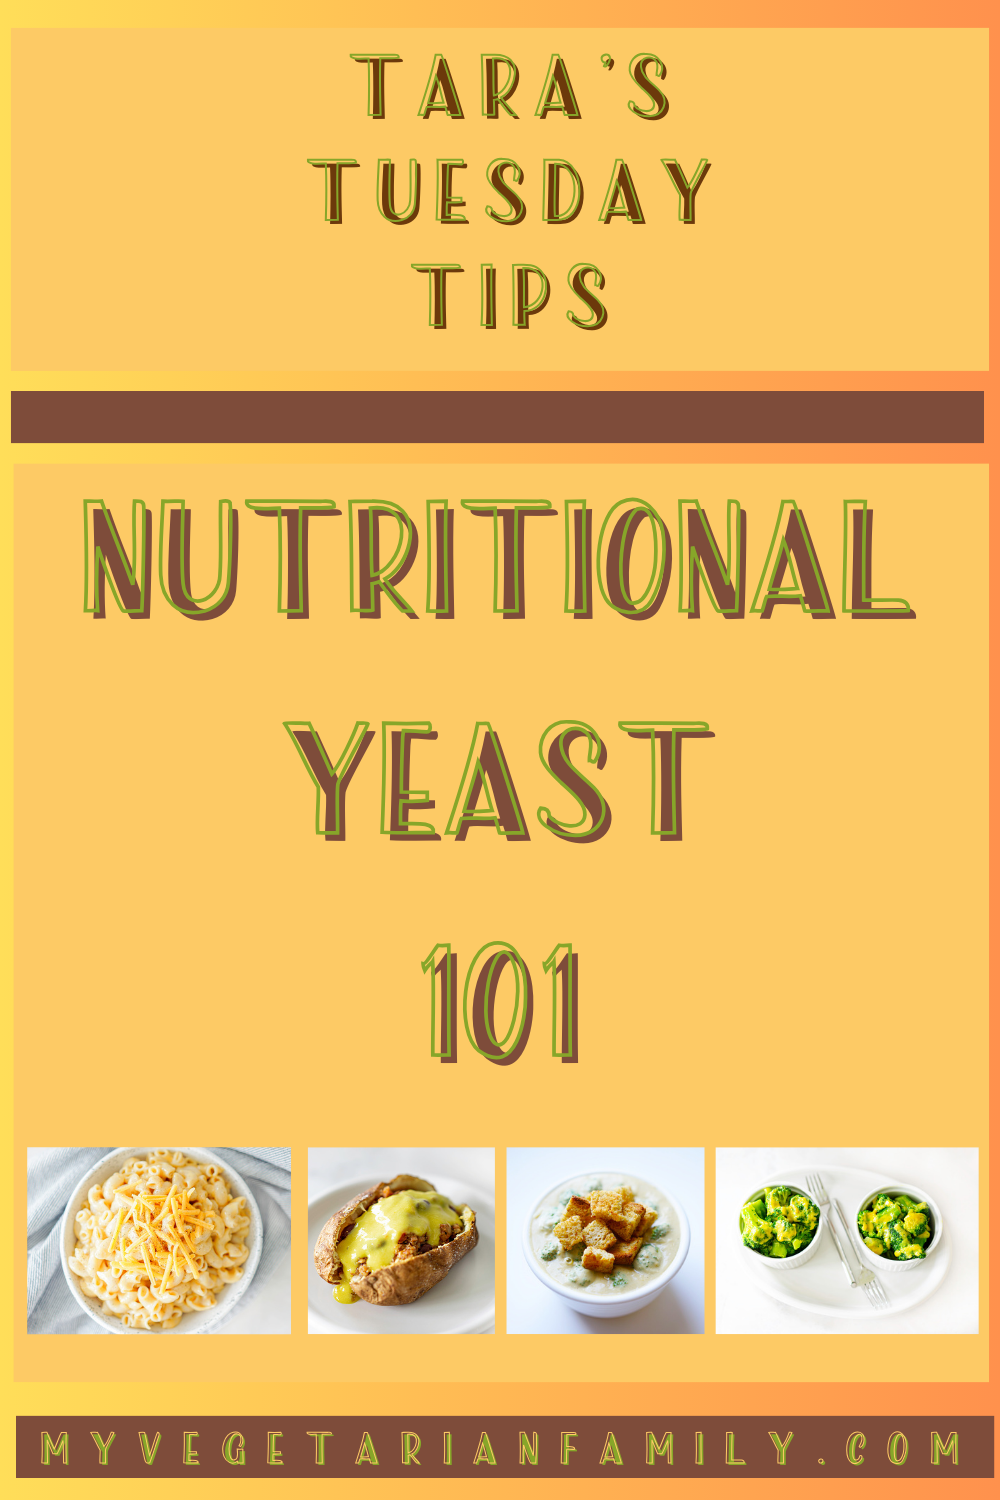 Nutritional Yeast 101 | My Vegetarian Family #tarastuesdaytips #nutritionalyeastfacts